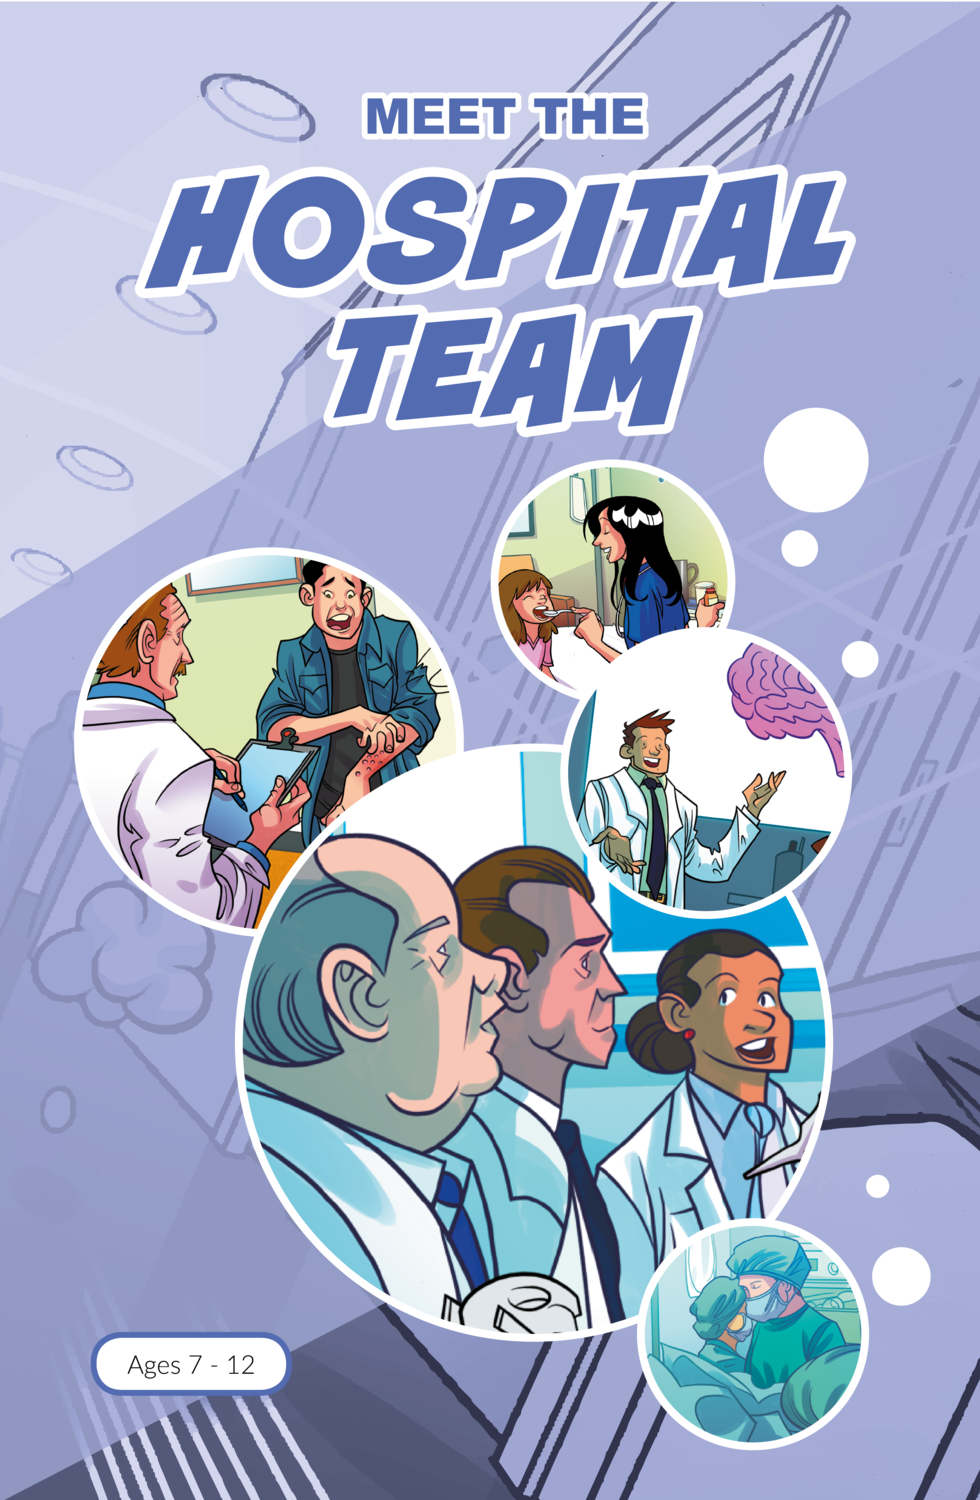 Meet the Hospital team Comic cover